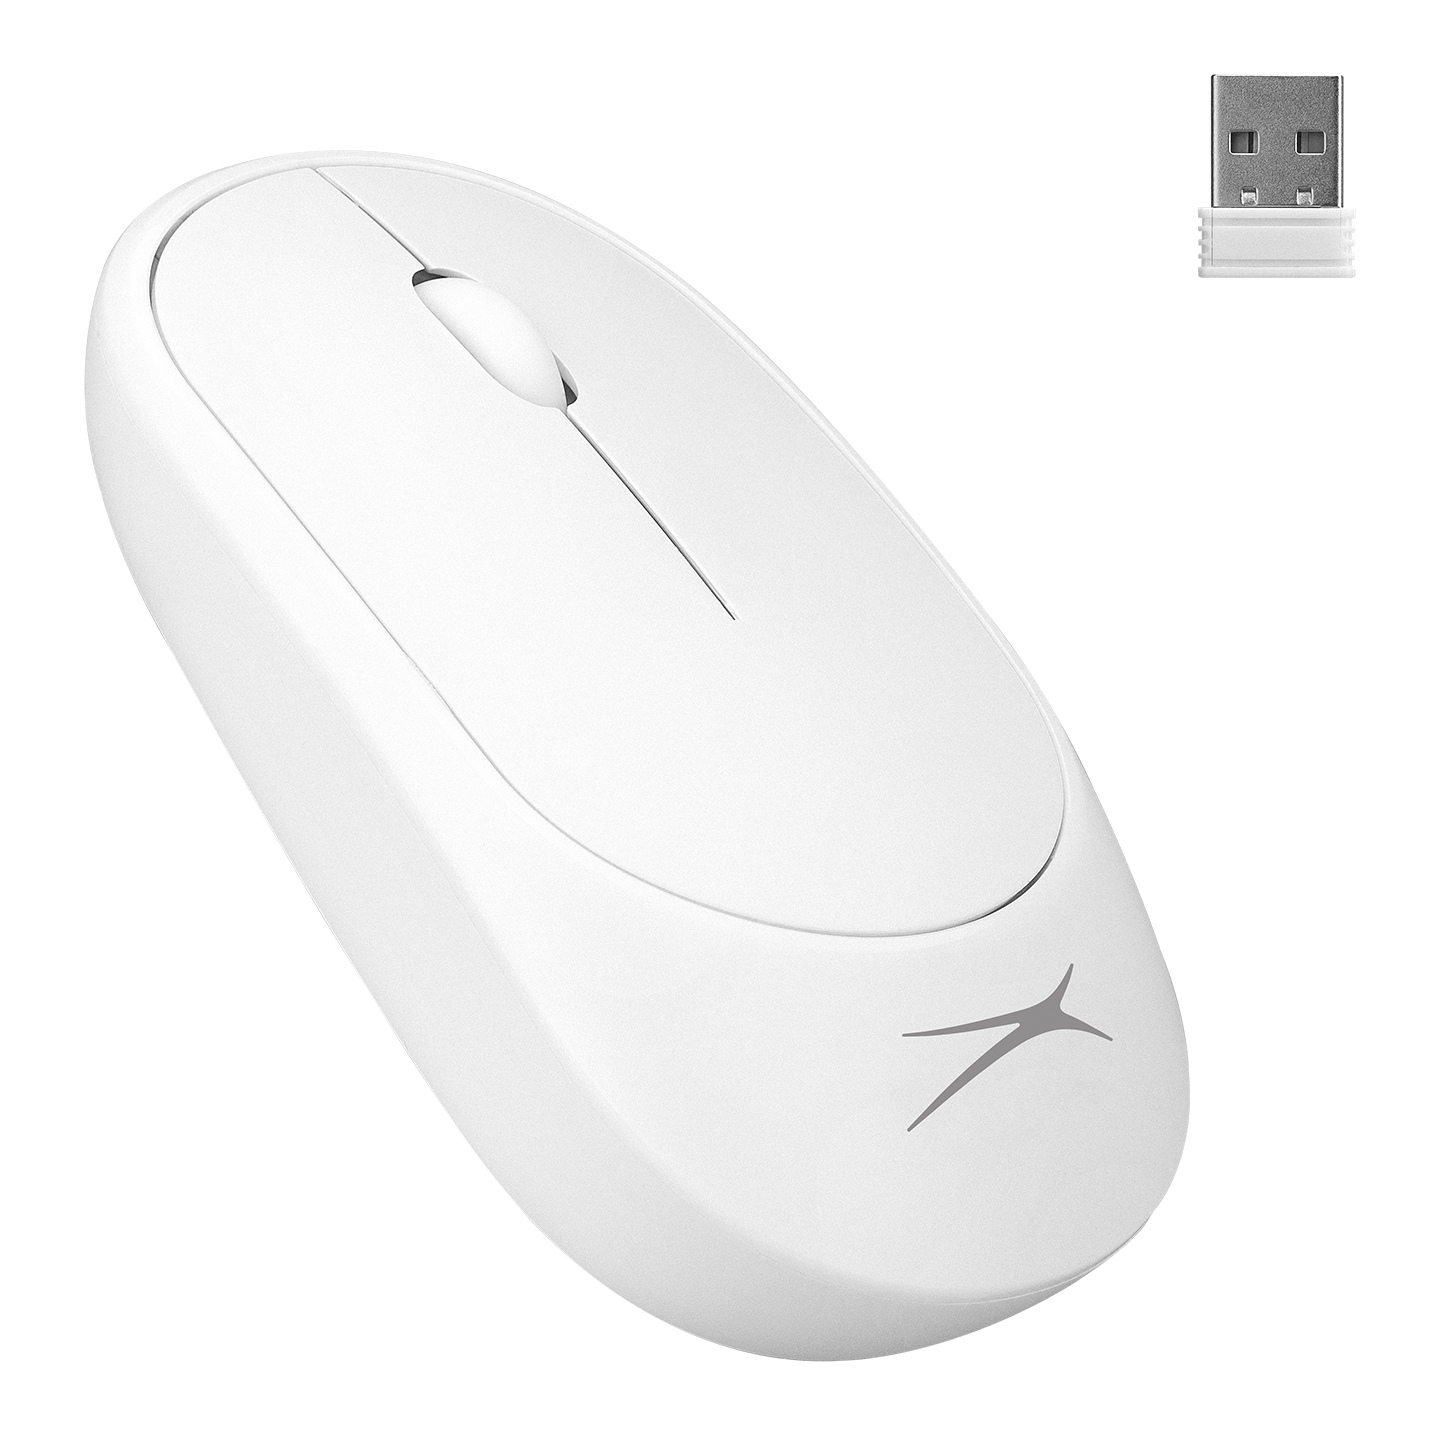 Altec Lansing ALBM7314 Beyaz 2.4GHz USB 1200DPI Alkalin Pilli Kablosuz Mouse